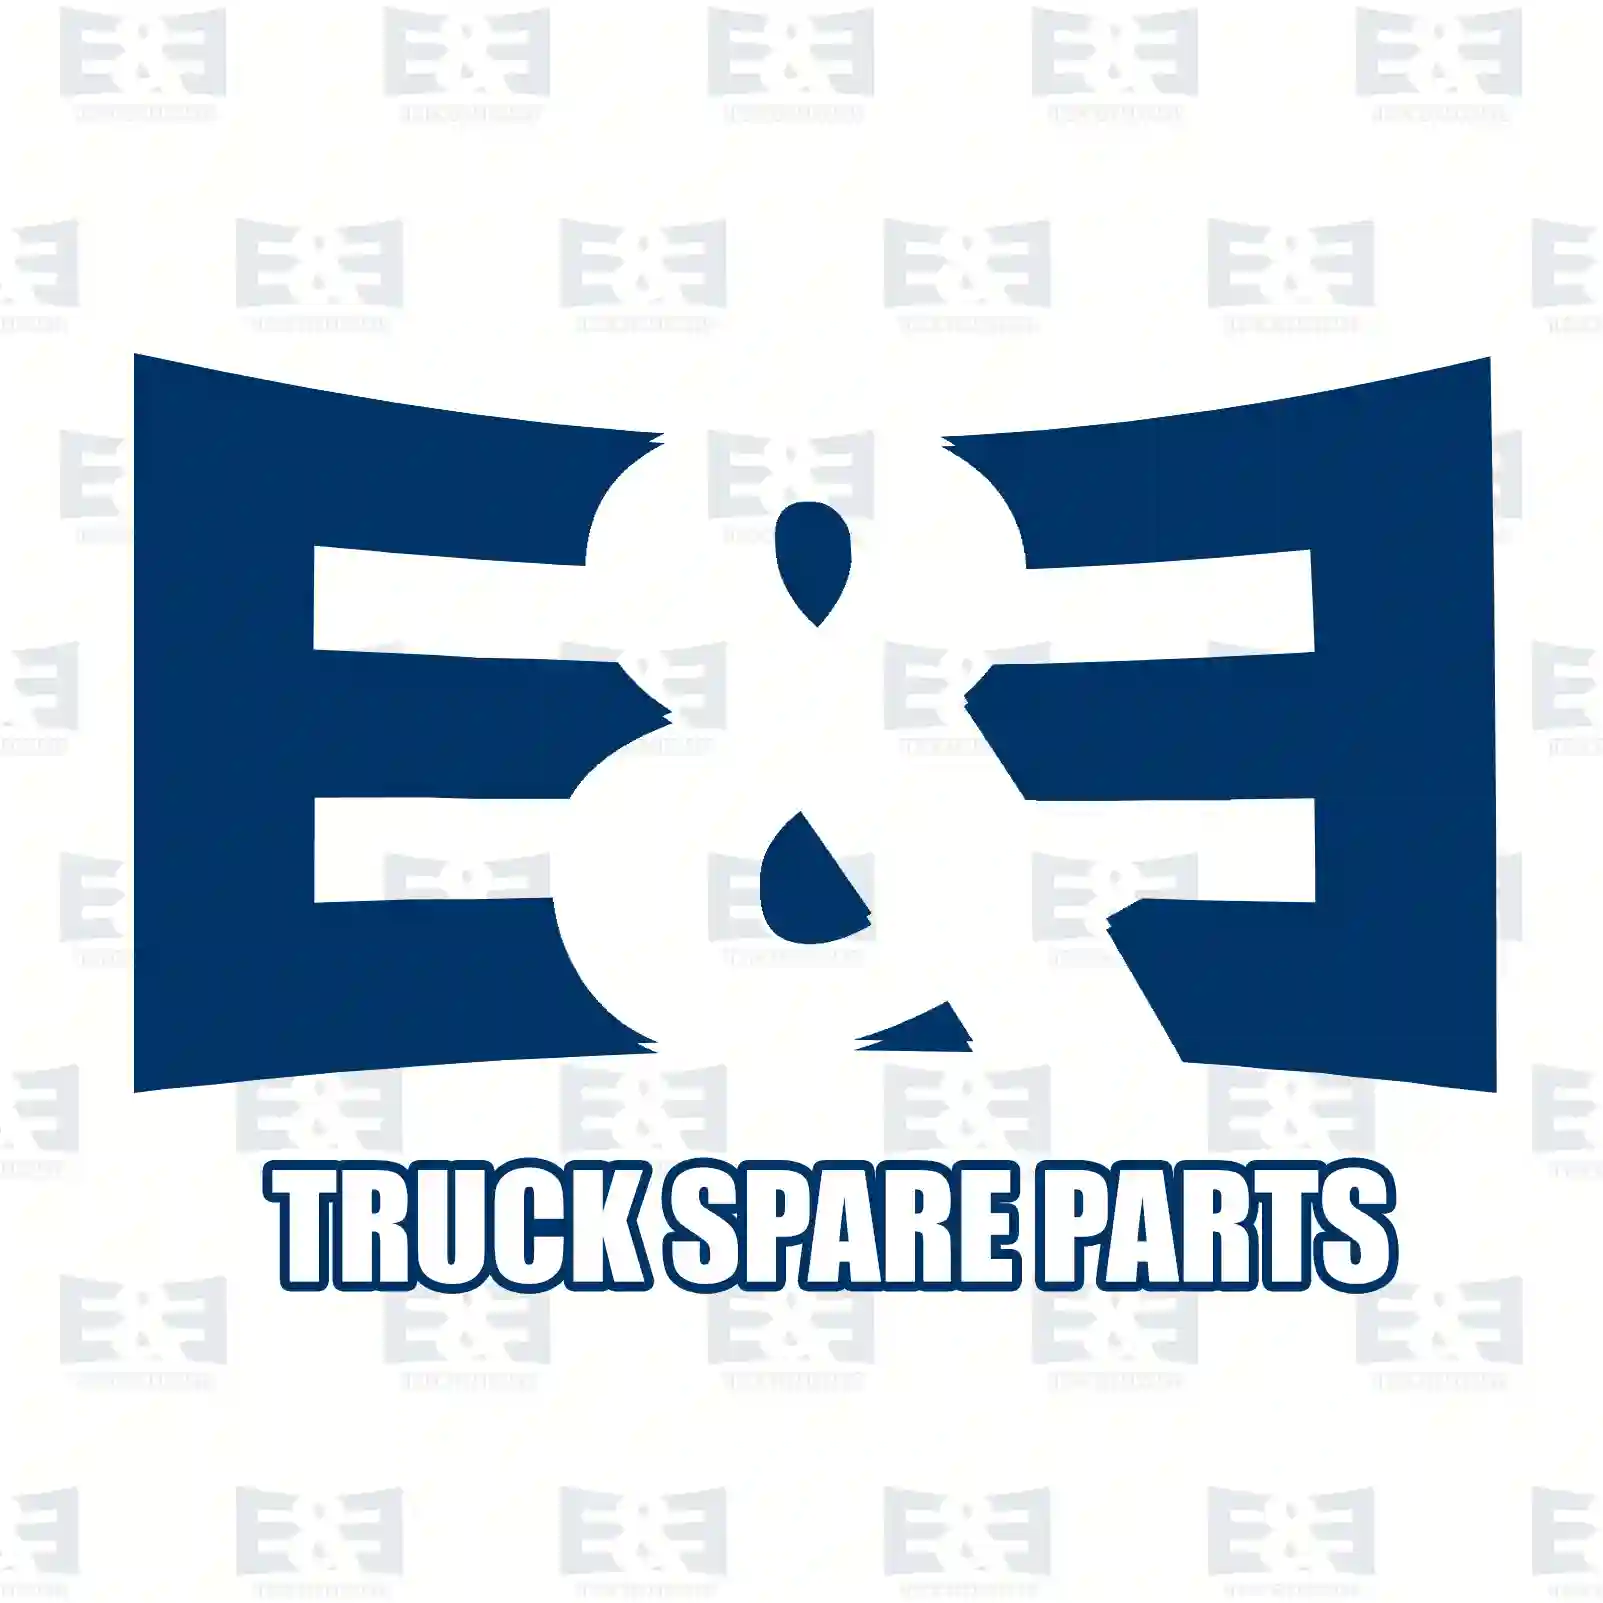 Vibration damper, crankshaft, 2E2206245, 1402190, 1496469, 1534763, 1731554 ||  2E2206245 E&E Truck Spare Parts | Truck Spare Parts, Auotomotive Spare Parts Vibration damper, crankshaft, 2E2206245, 1402190, 1496469, 1534763, 1731554 ||  2E2206245 E&E Truck Spare Parts | Truck Spare Parts, Auotomotive Spare Parts